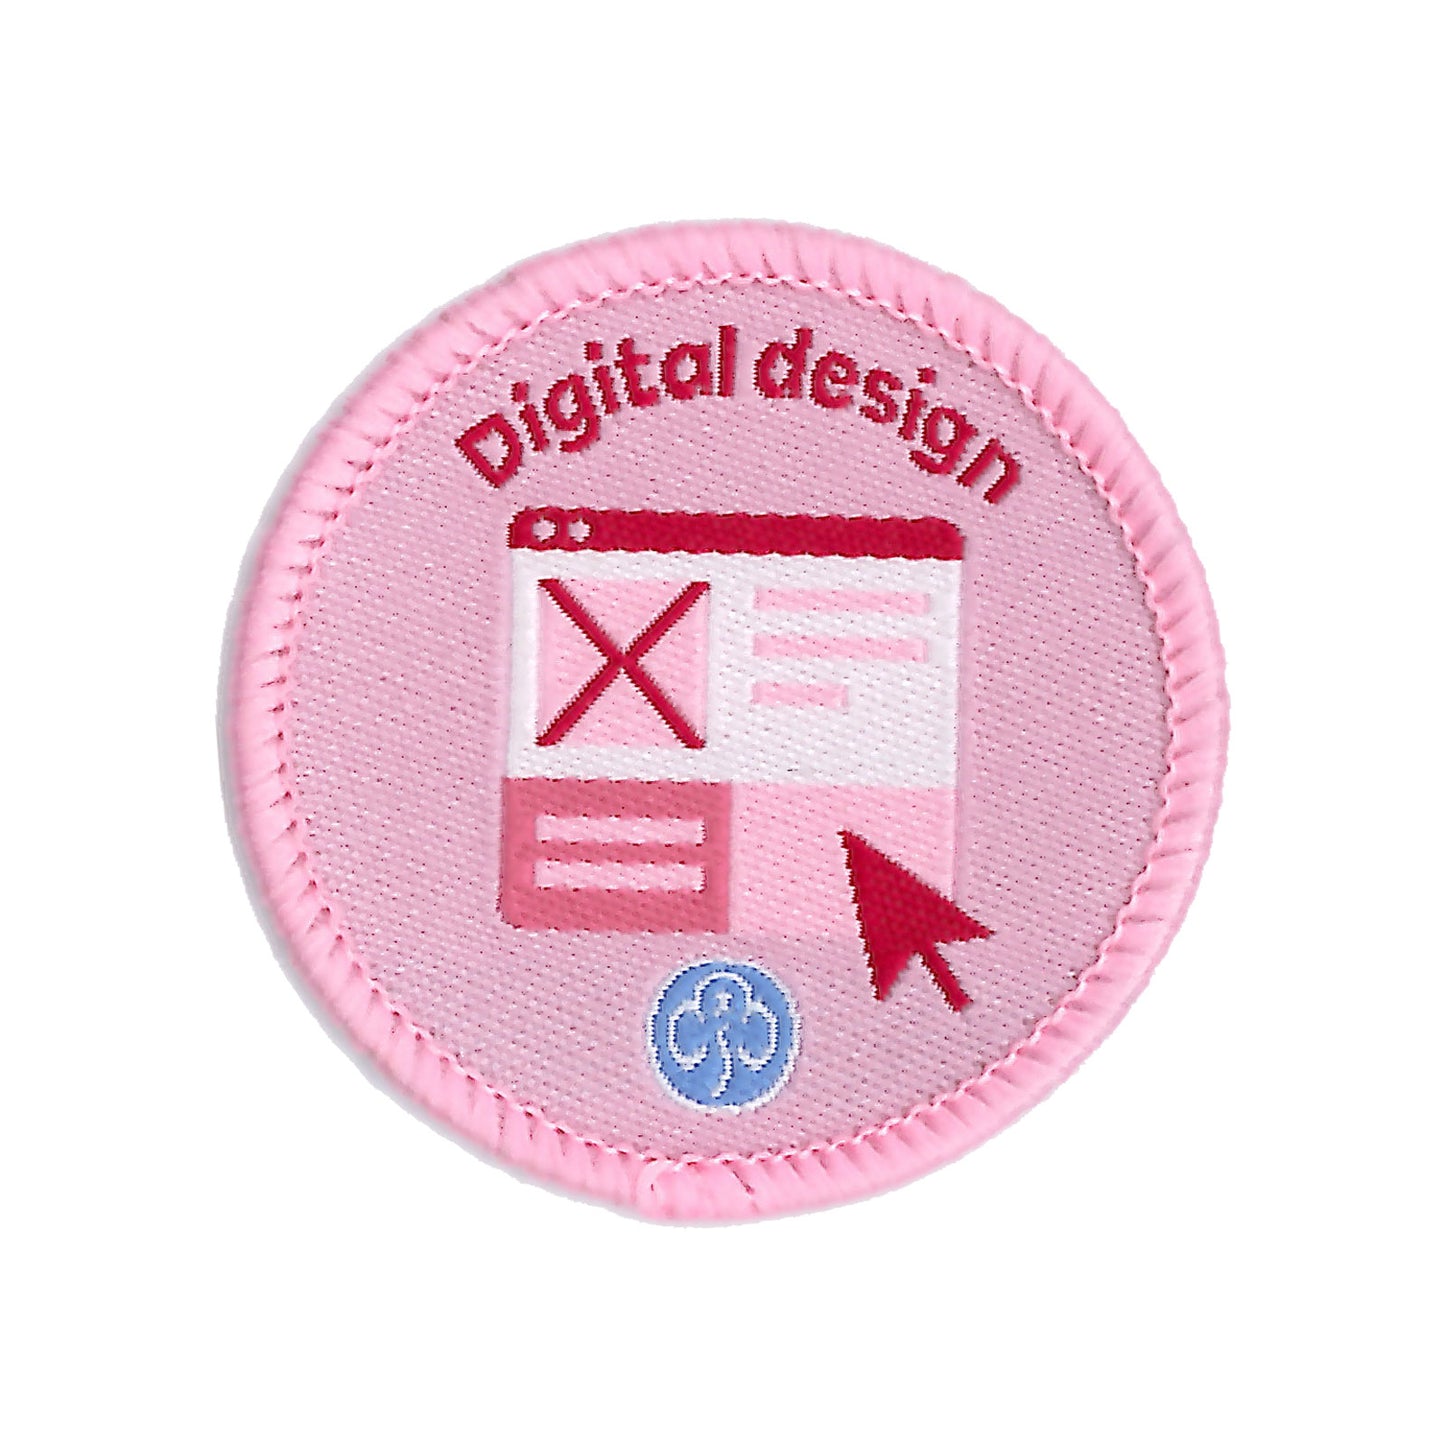 Rangers Digital Design Woven Badge